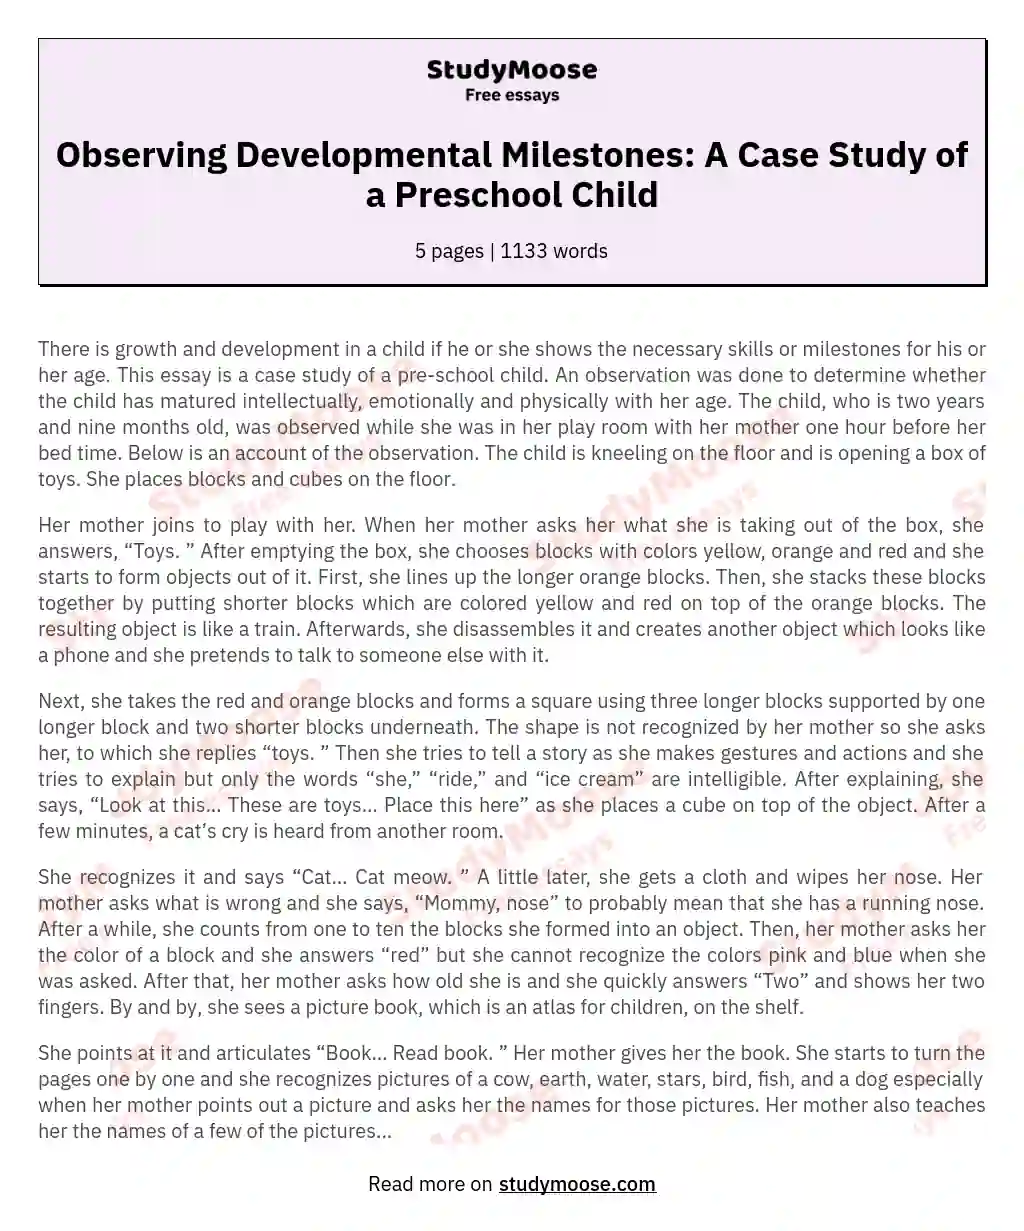 Observing Developmental Milestones: A Case Study of a Preschool Child essay